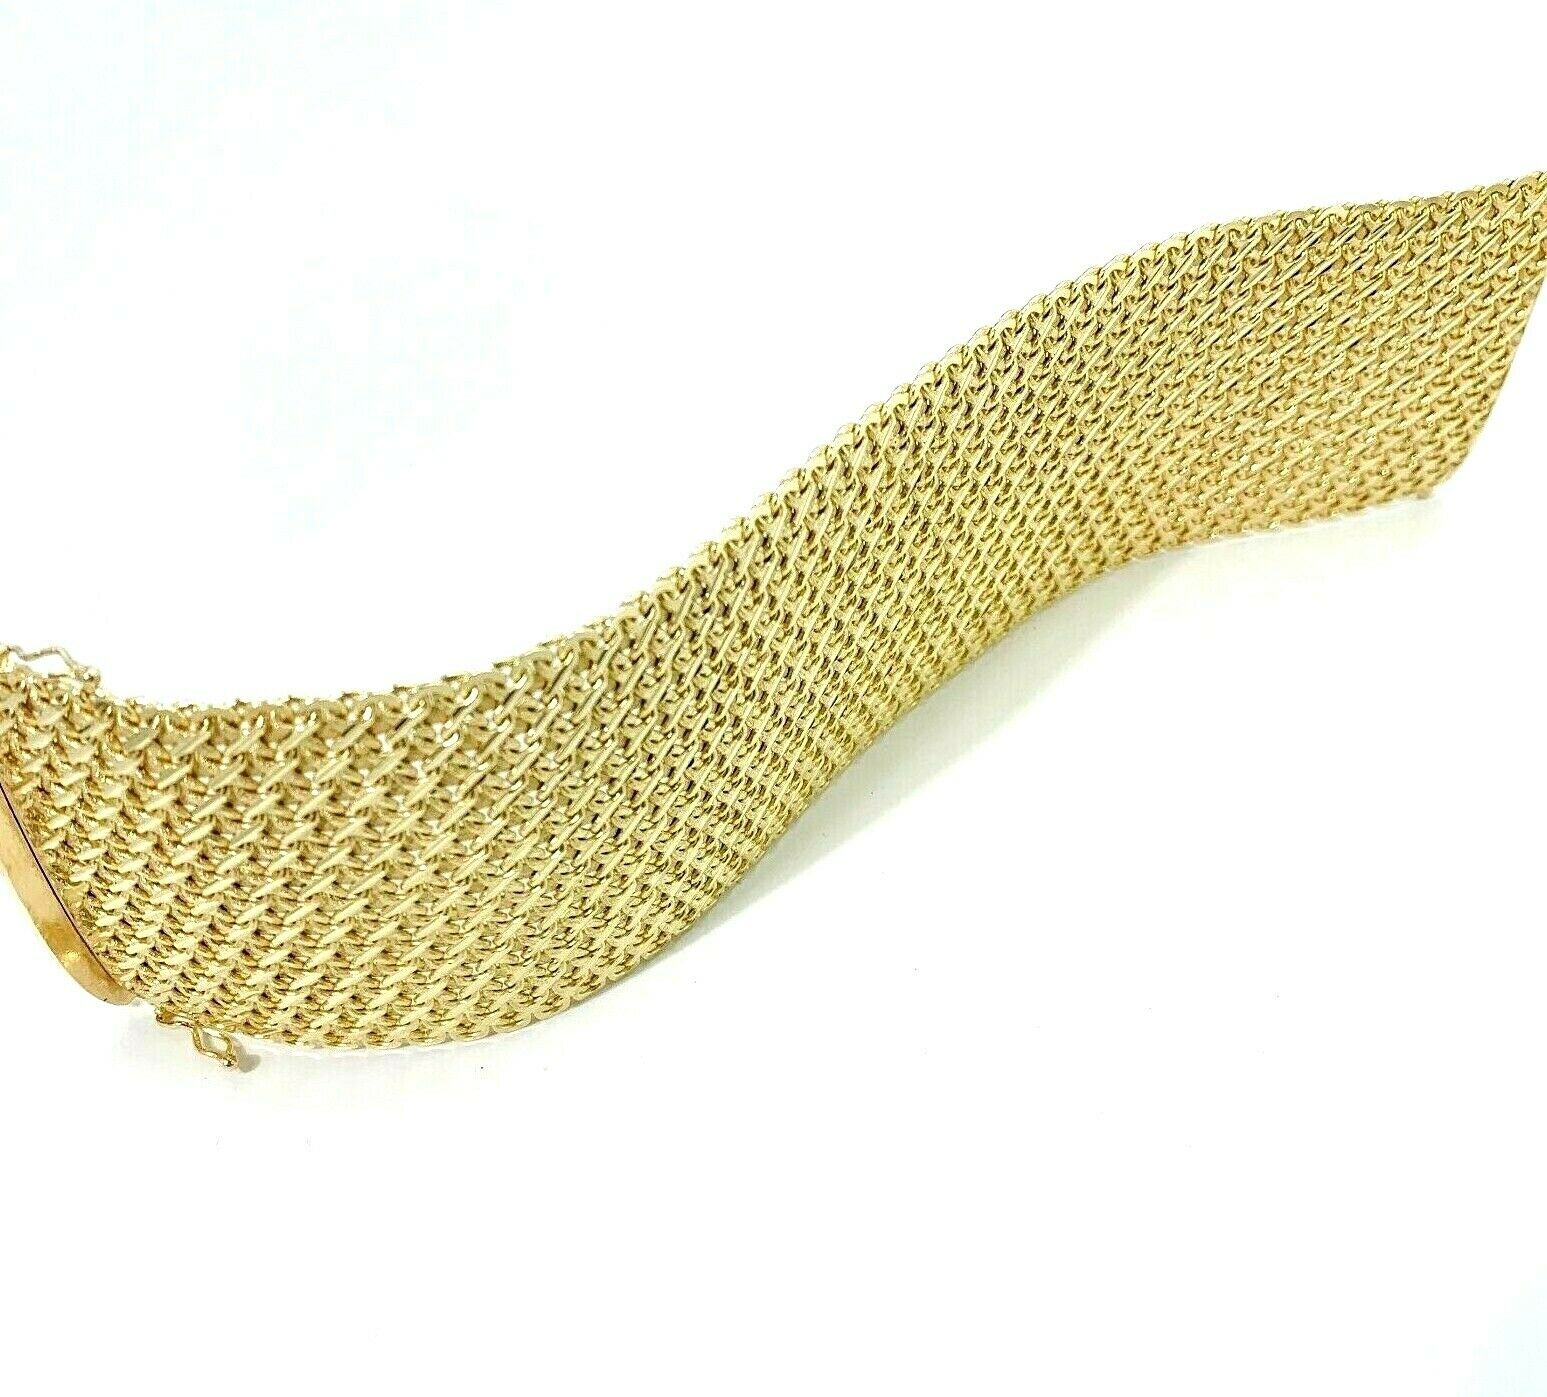 Vintage Italian Womens Bracelet Chain Mesh Solid 14K Gold 3.67 Ounces 1980's